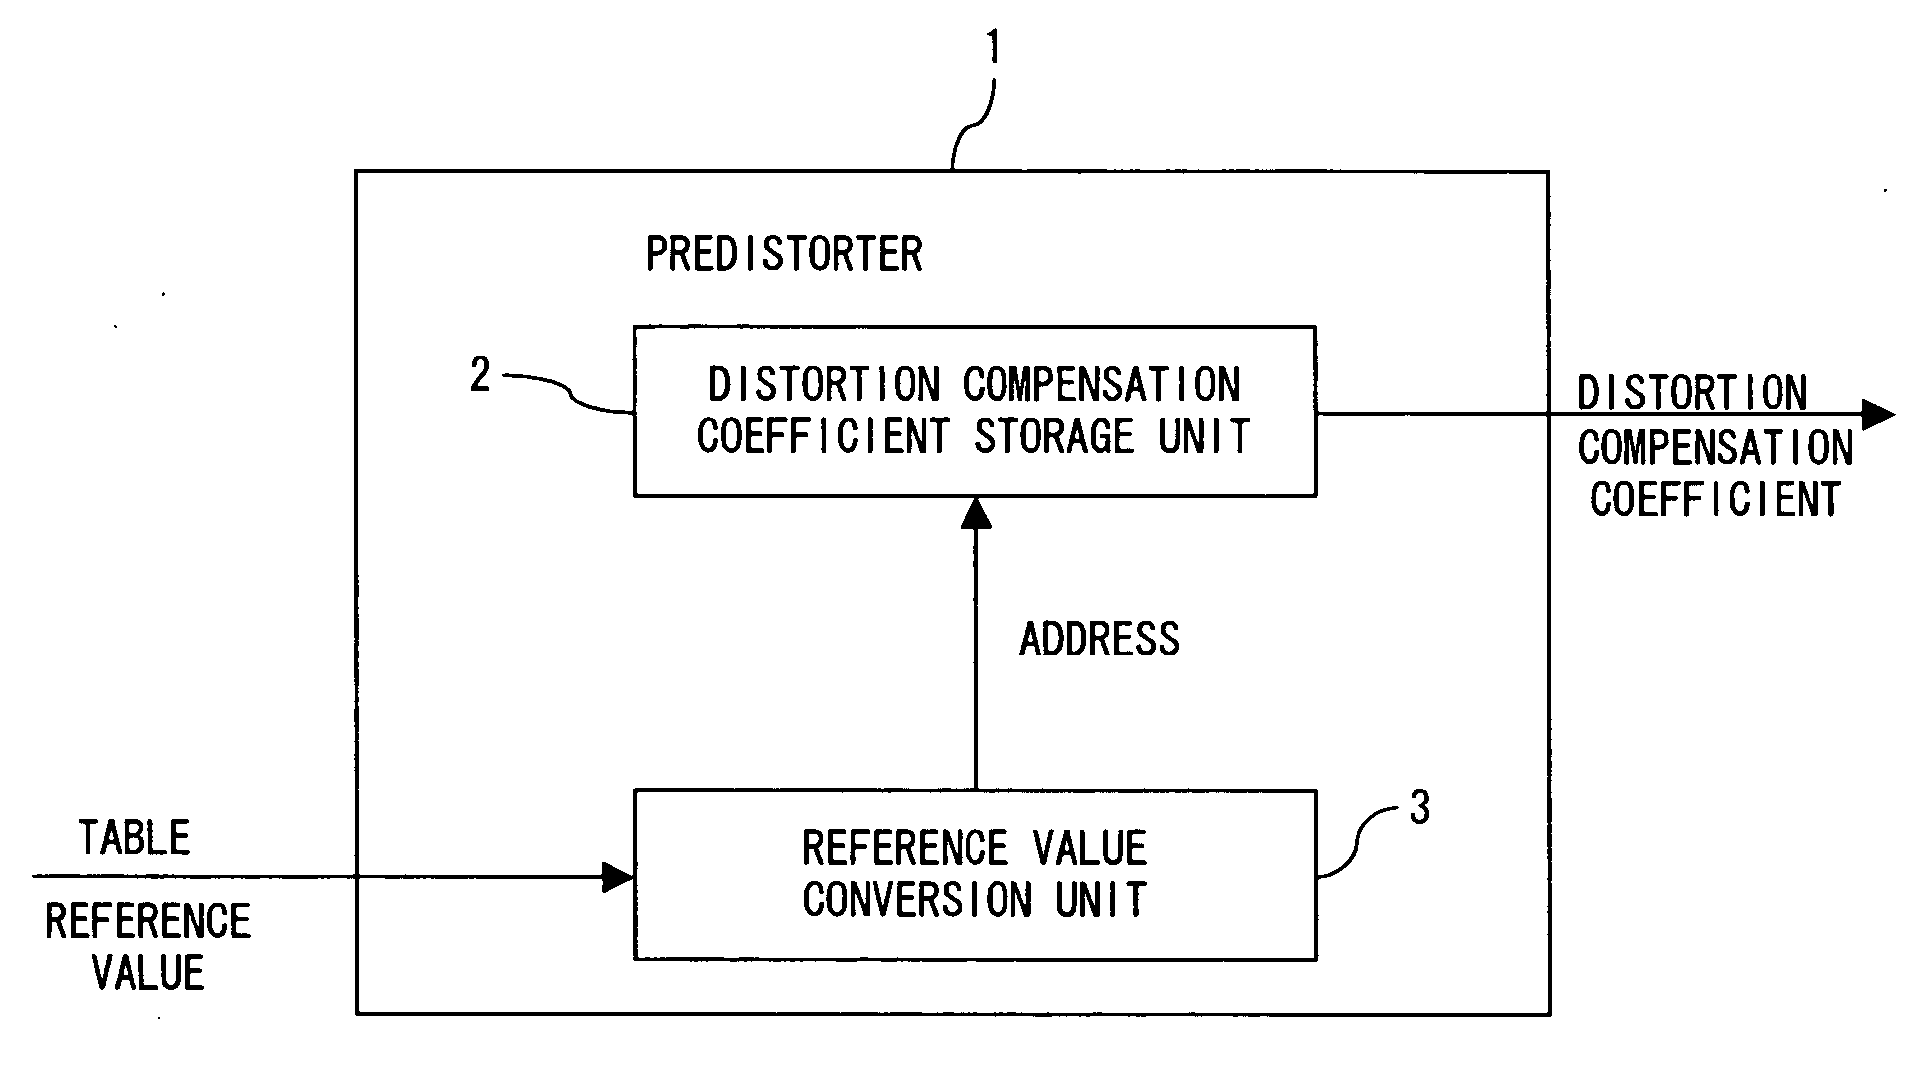 Table reference type predistorter